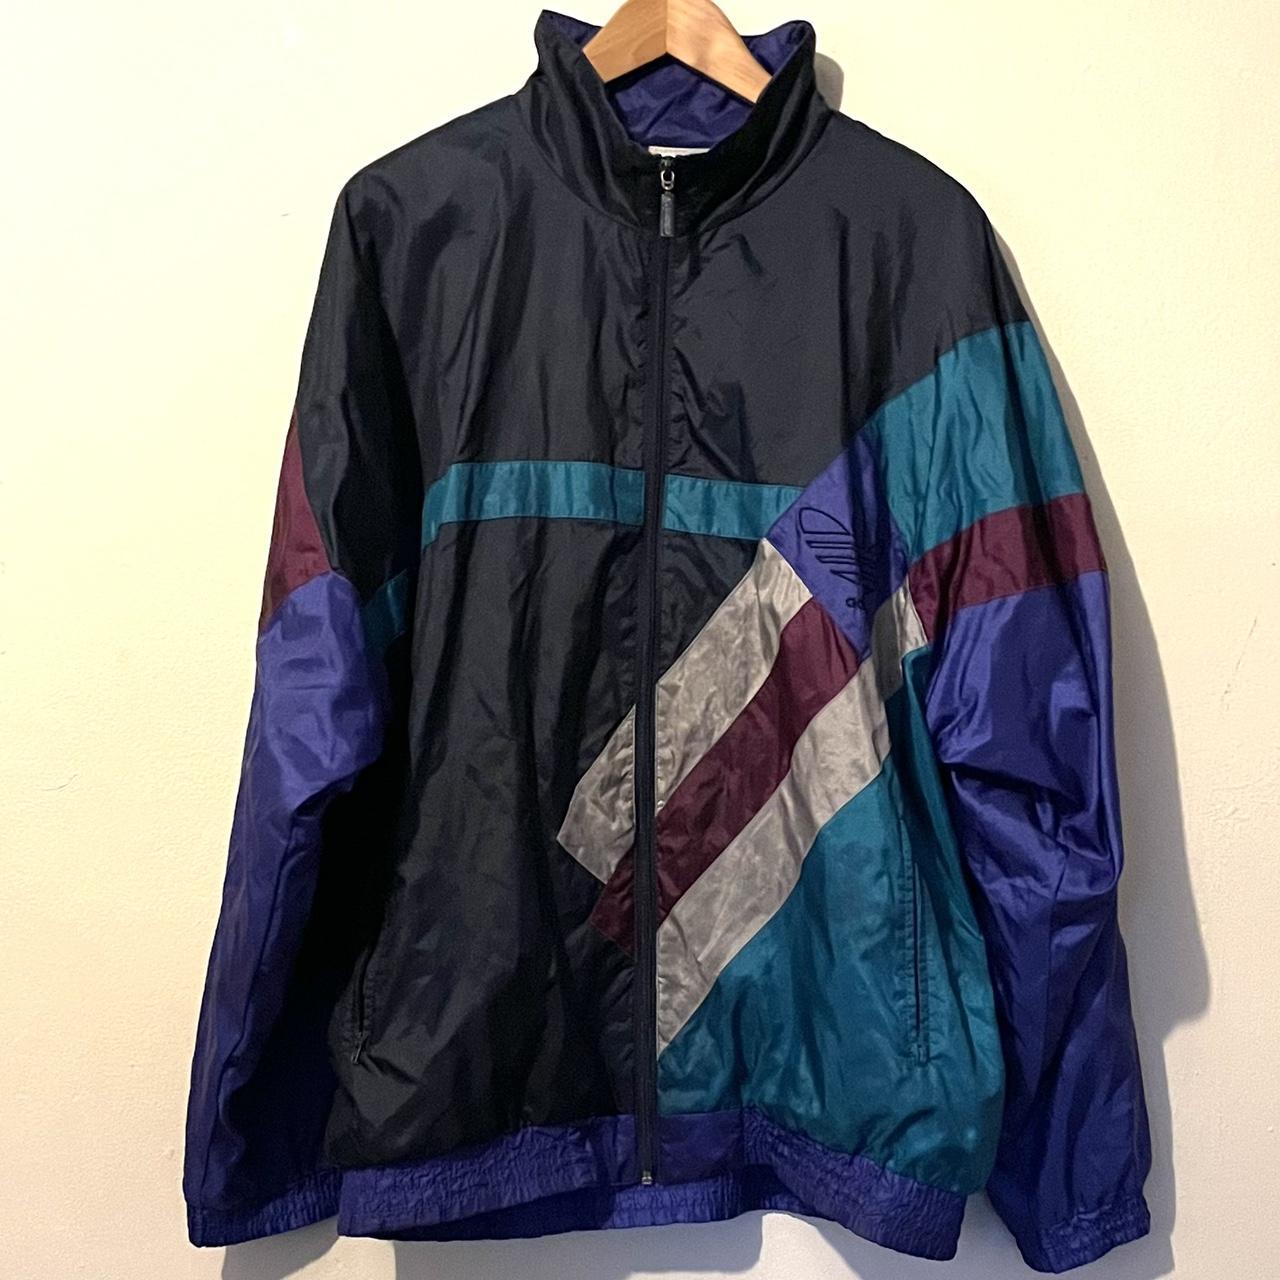 Vintage Adidas Originals track jacket in... - Depop